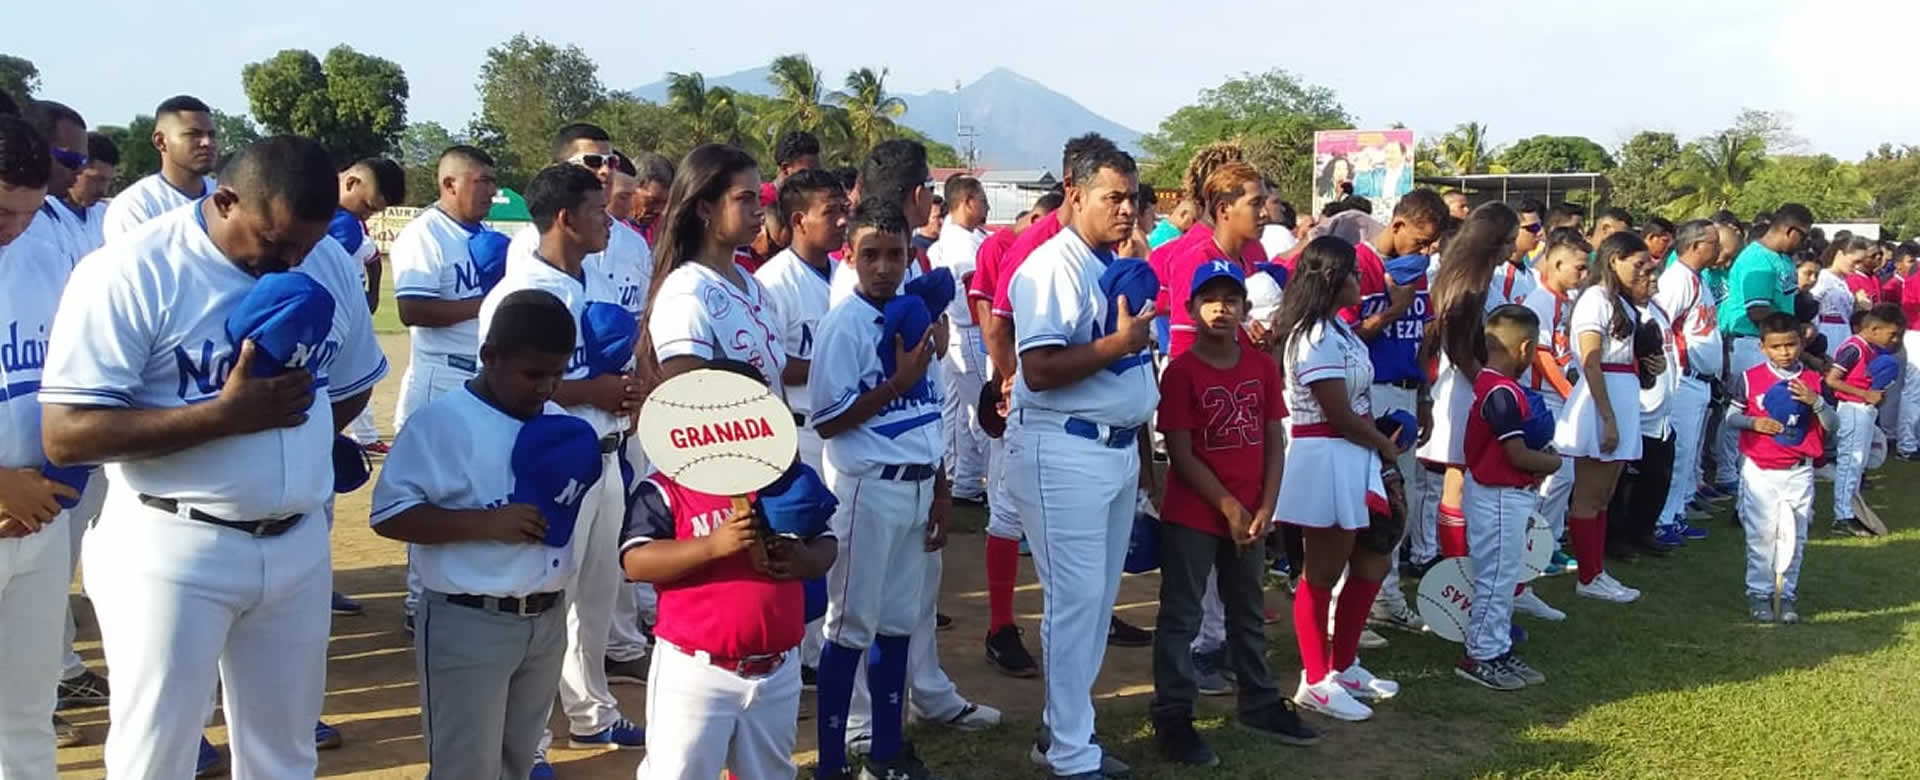 Nandaime inaugura Campeonato Nacional de Béisbol Mayor "A".